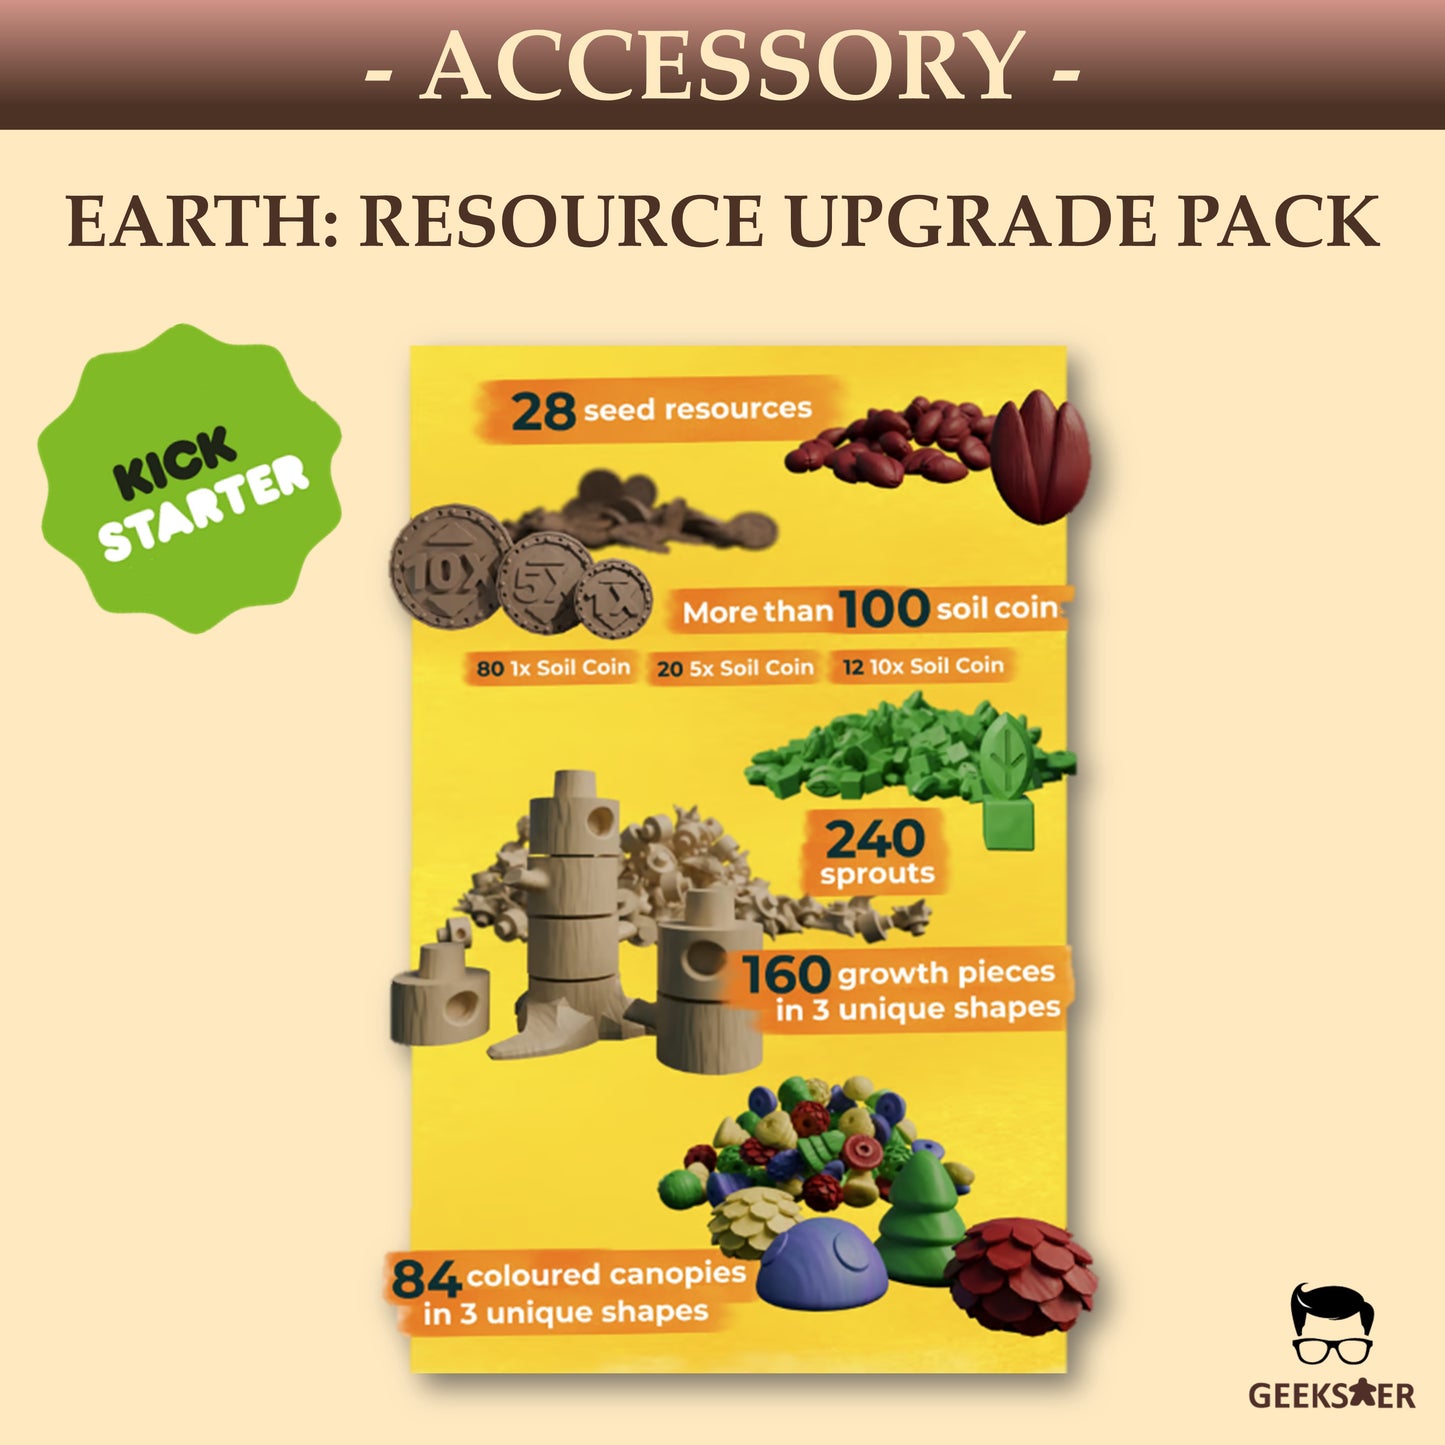 Earth: Abundance Expansion (Pre-order)